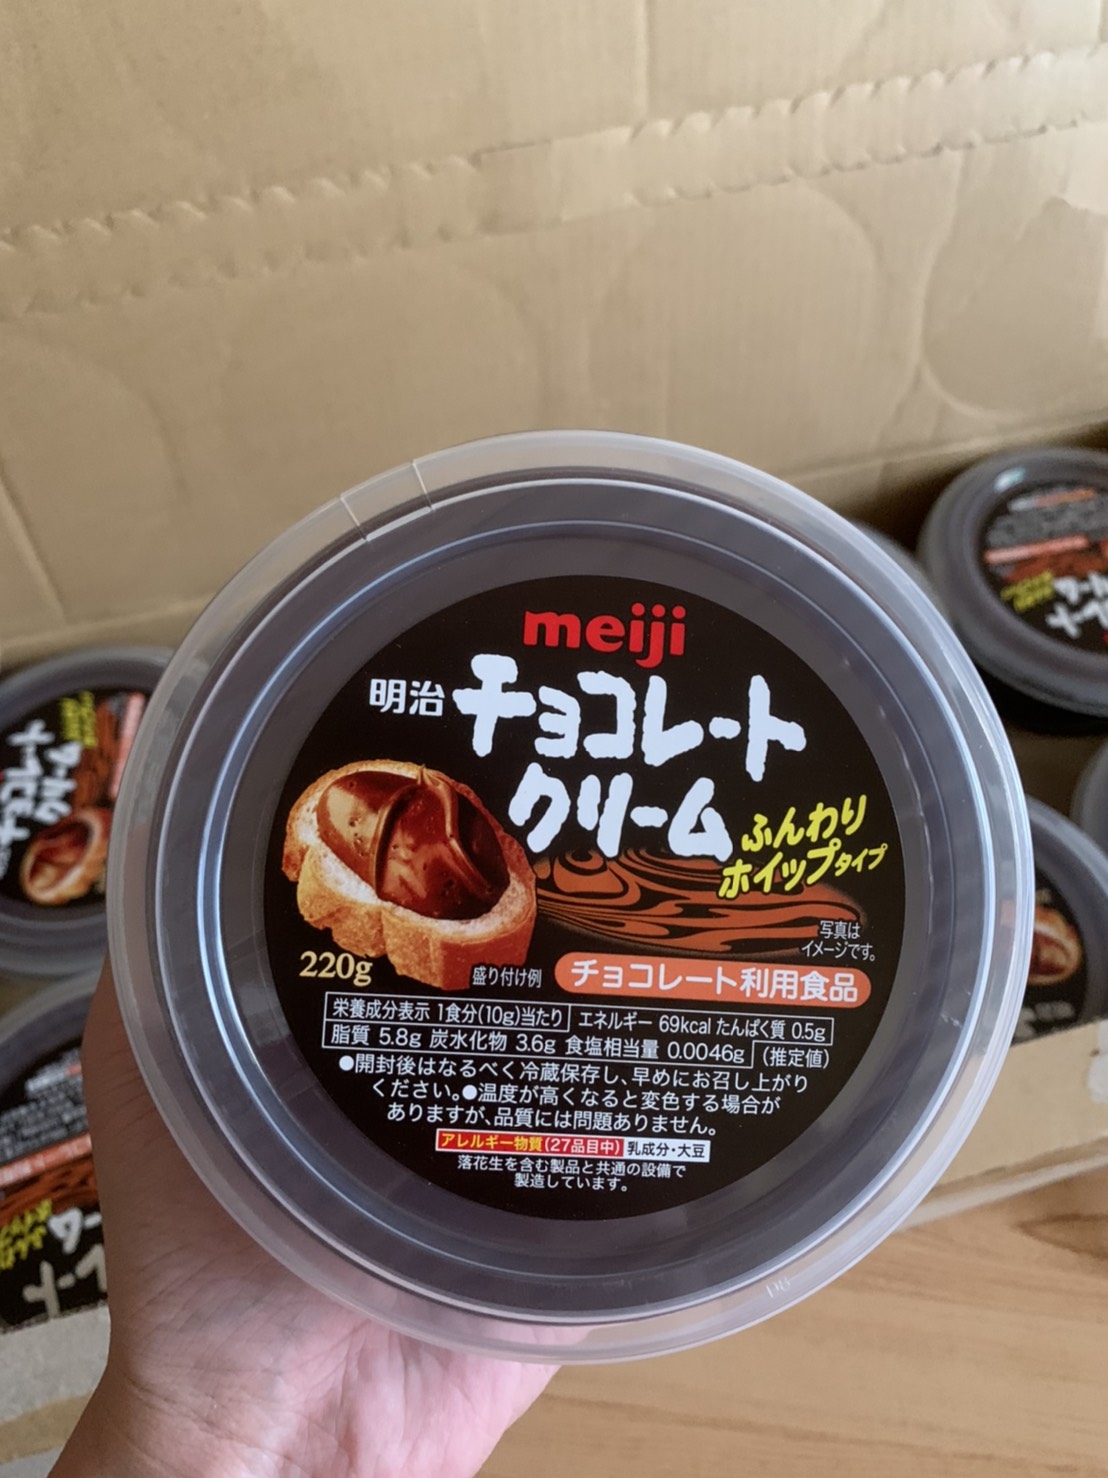 Meiji chocolate cream spread 220g. Exp.09/2021